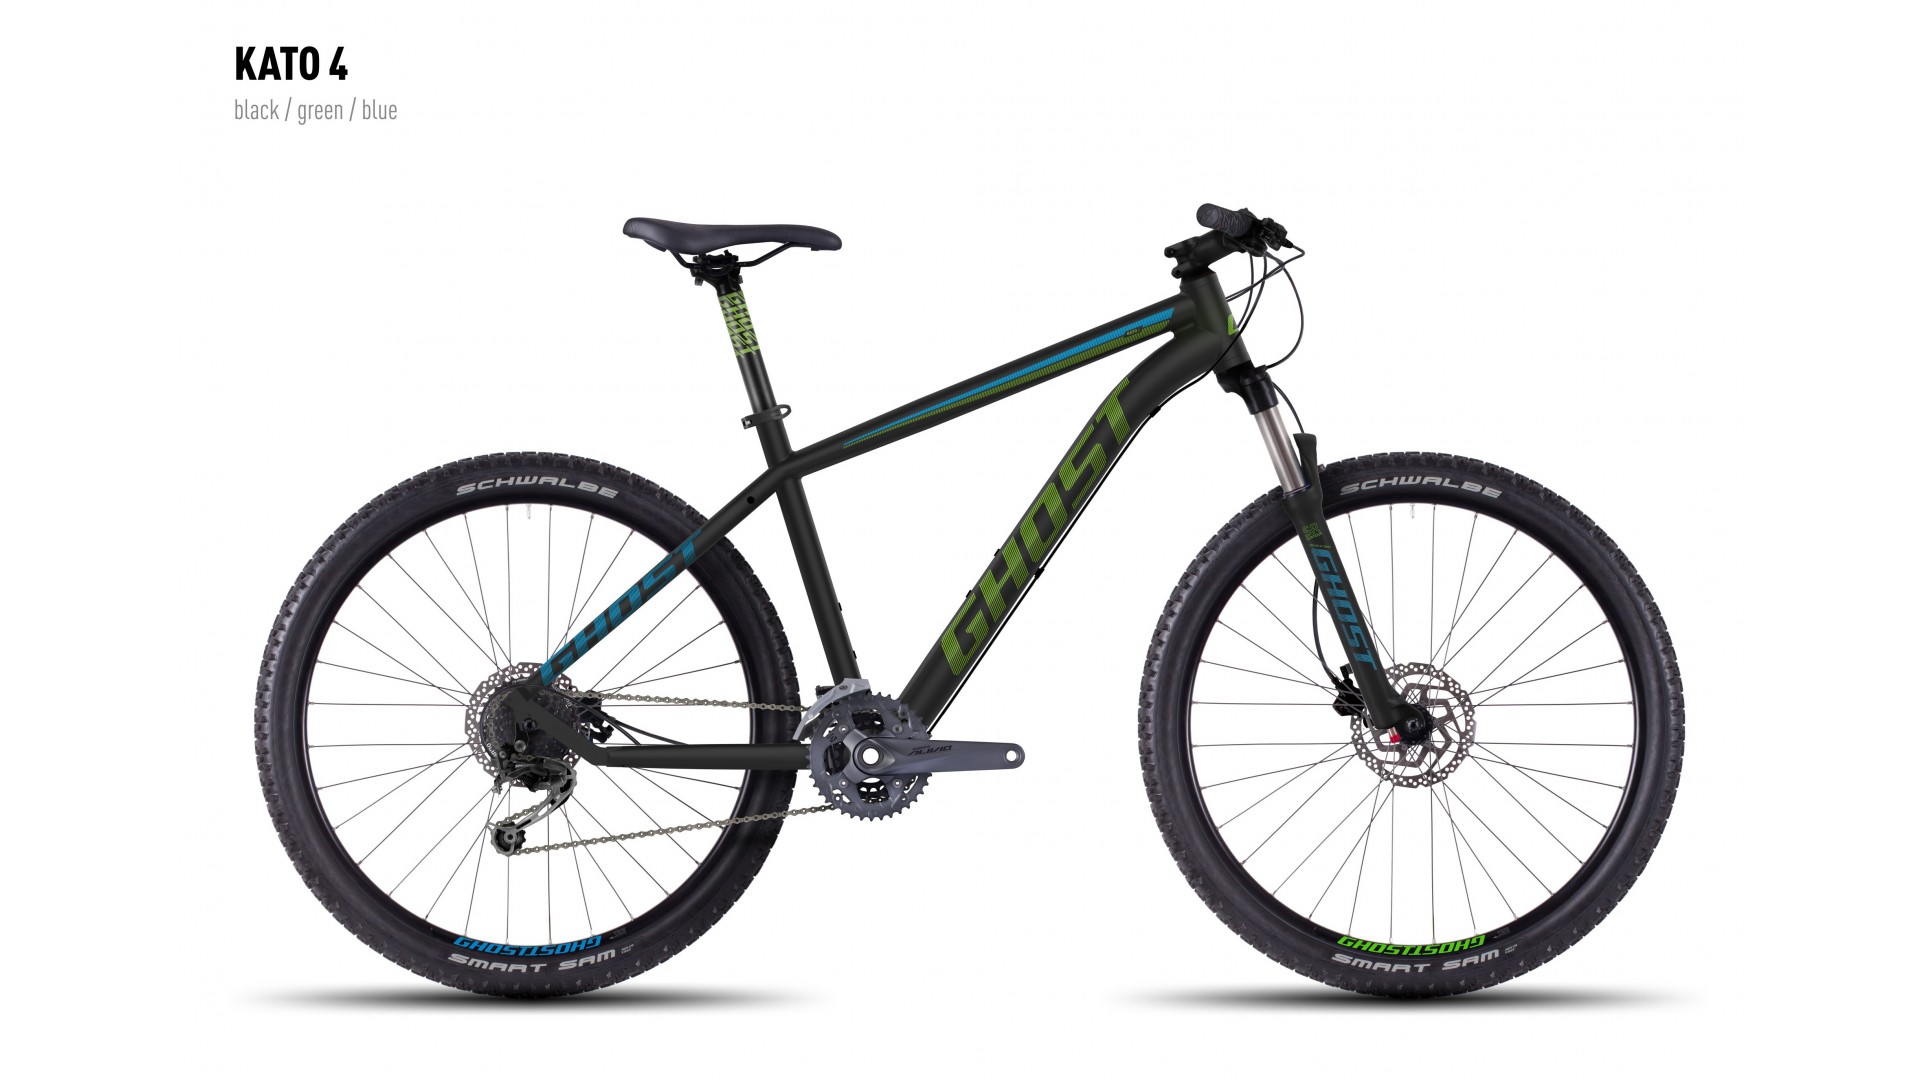 Велосипед GHOST Kato 4 black/green/blue год 2016